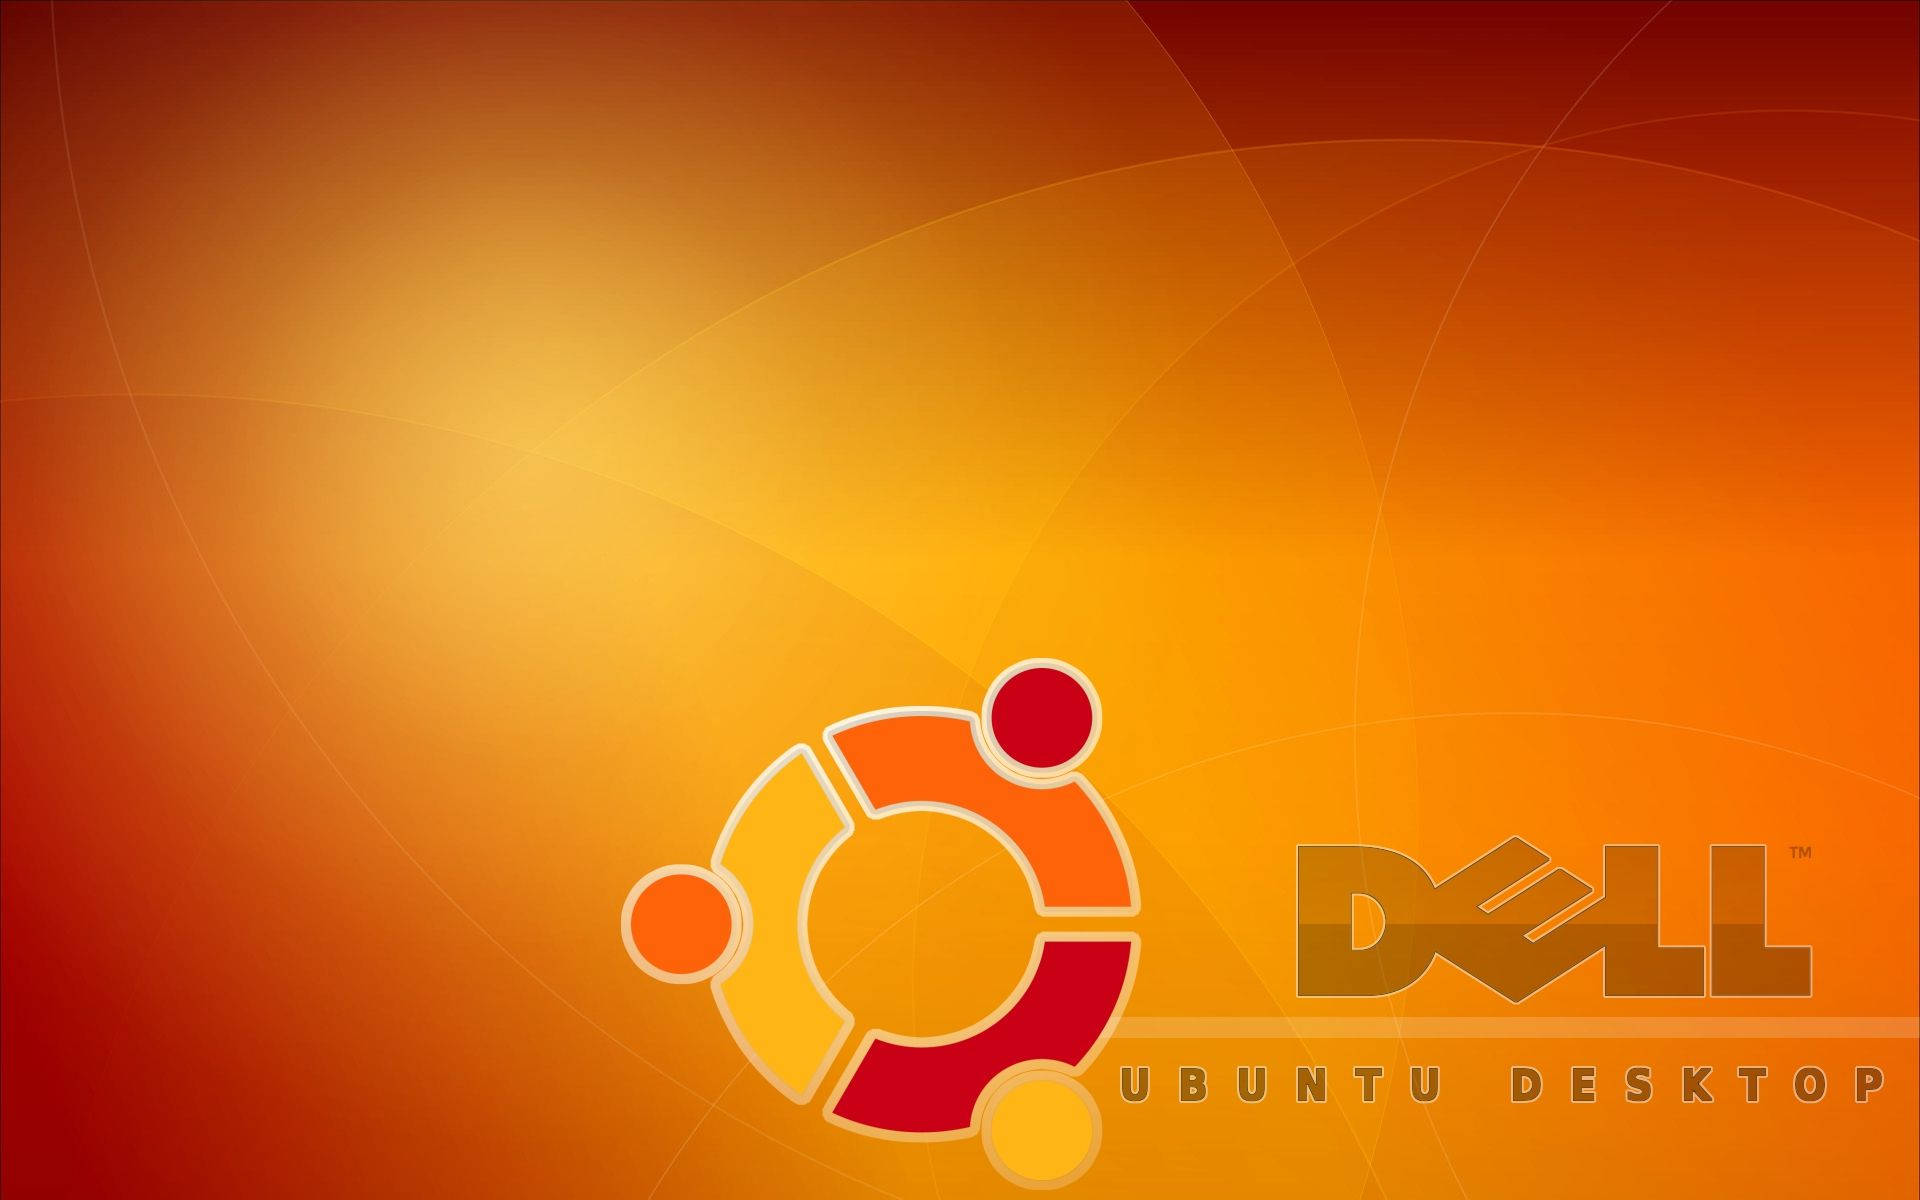 Dell X Ubuntu Desktop Background